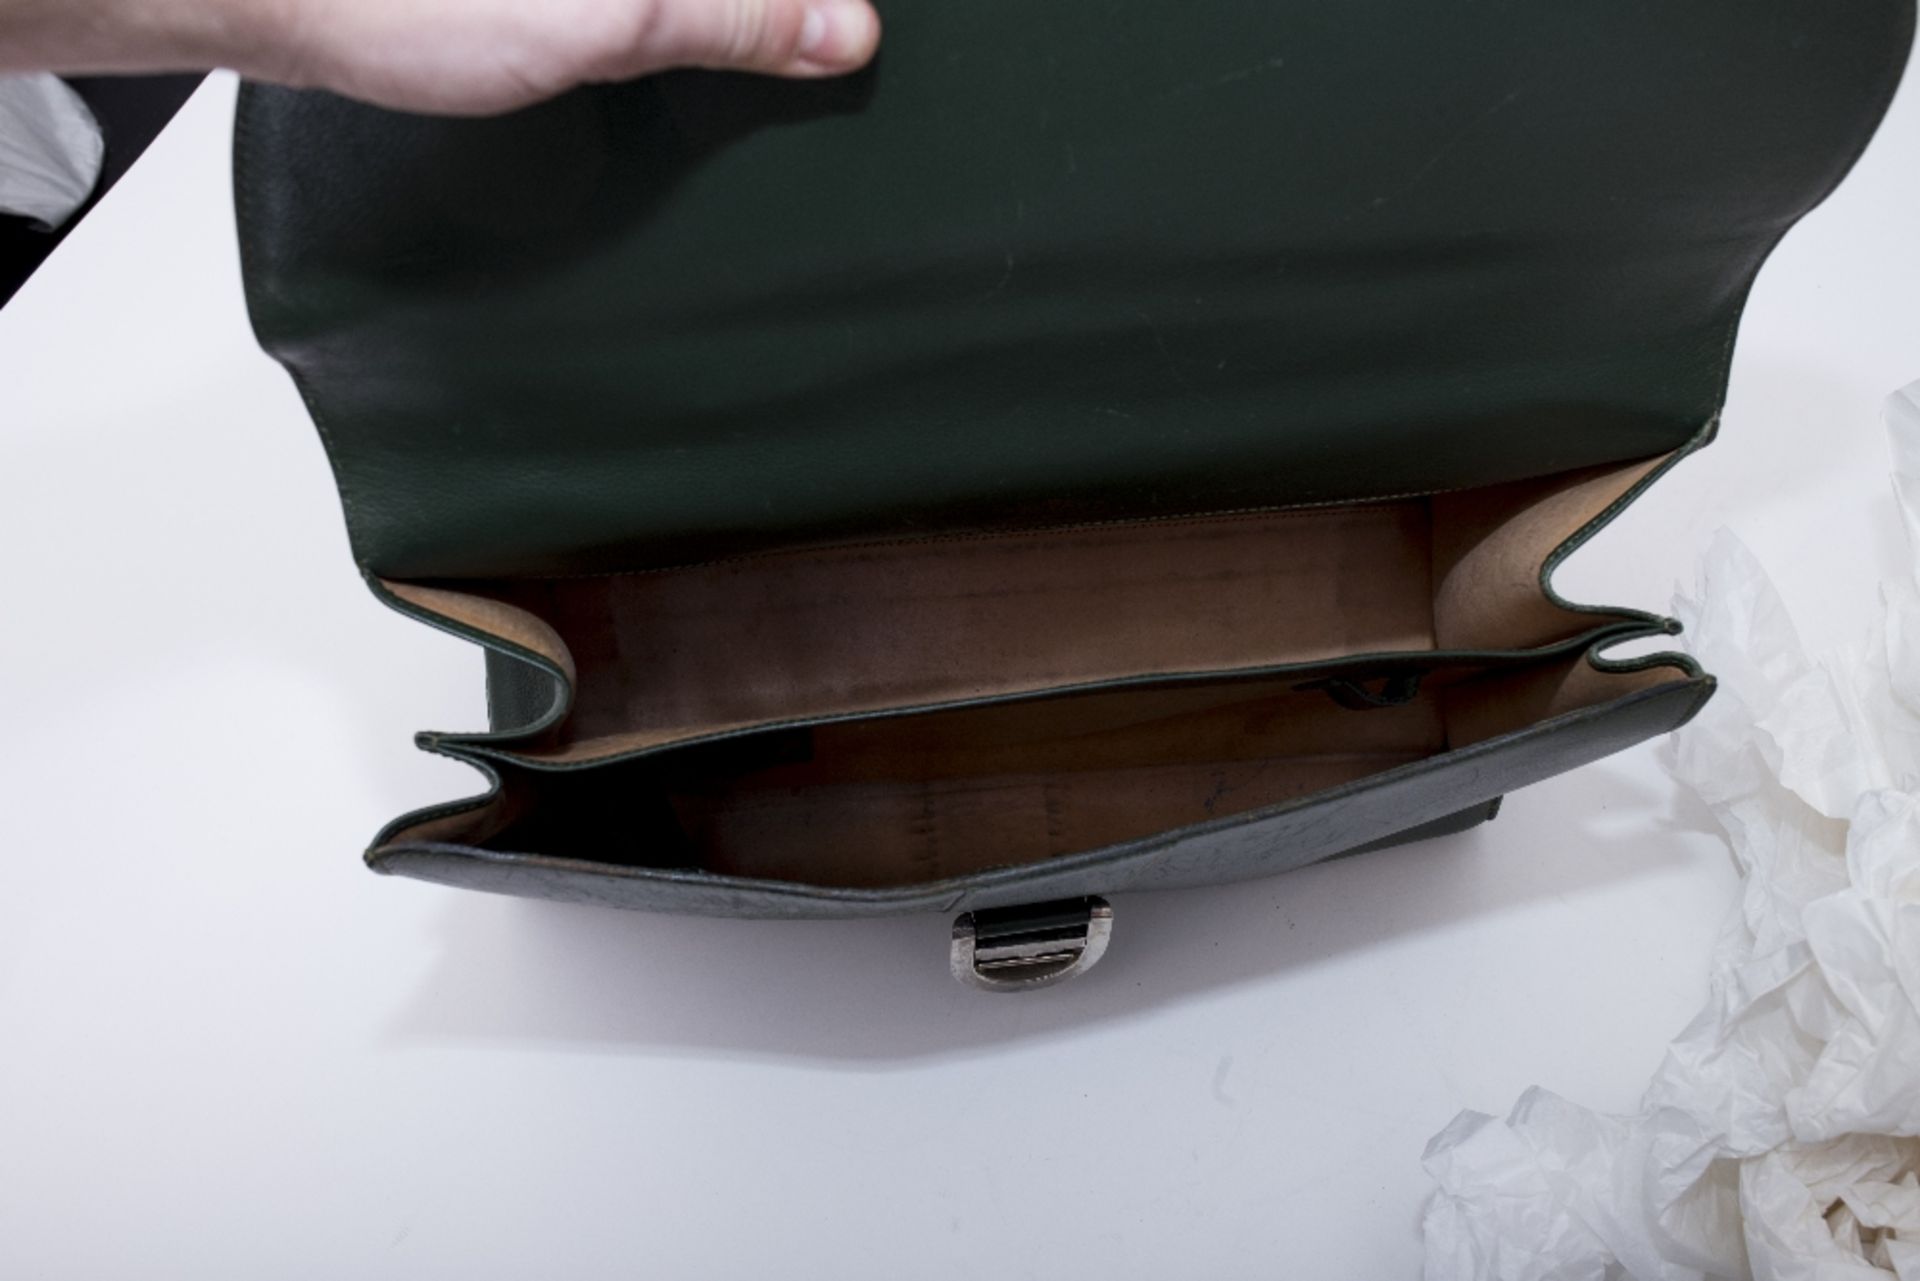 Delvaux Brillant handbag: Large model in full-grain forest-green leather, with shoulder strap. - Image 3 of 4